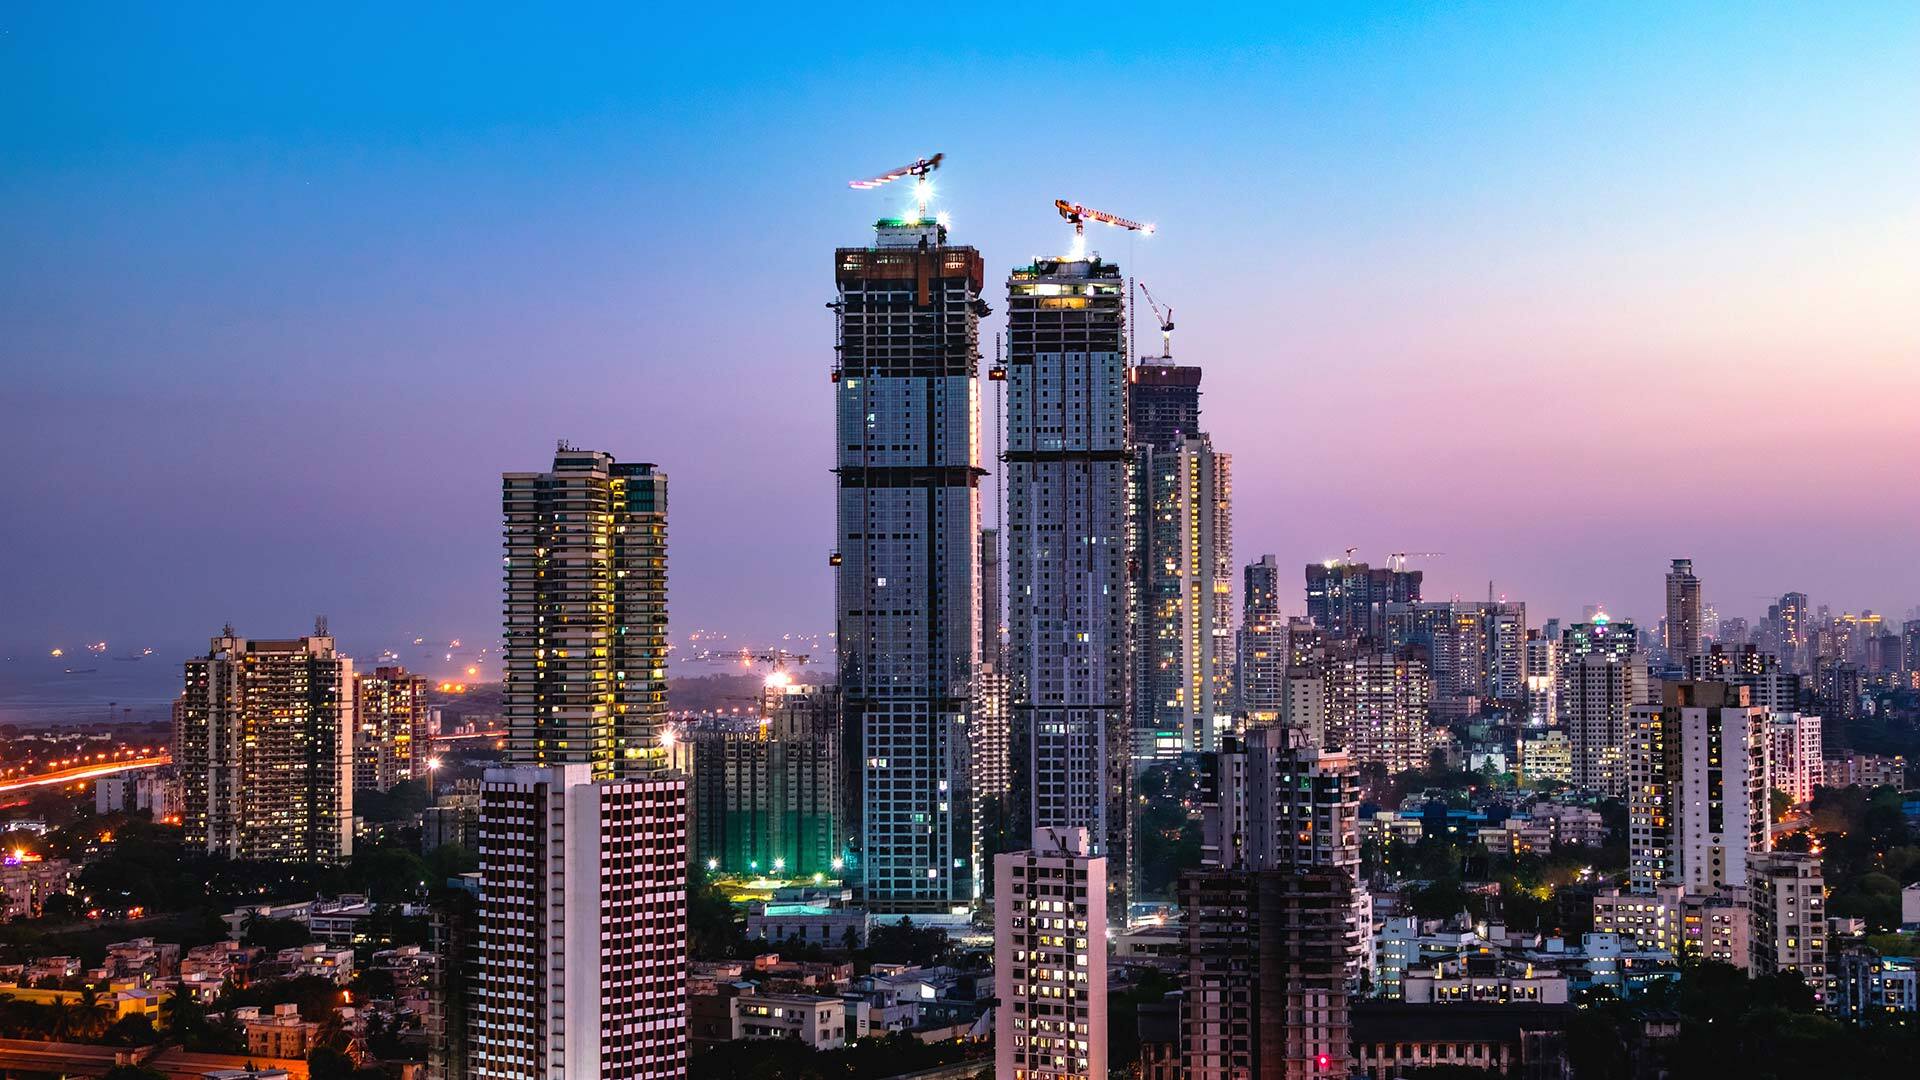 Skyline of Mumbai in India